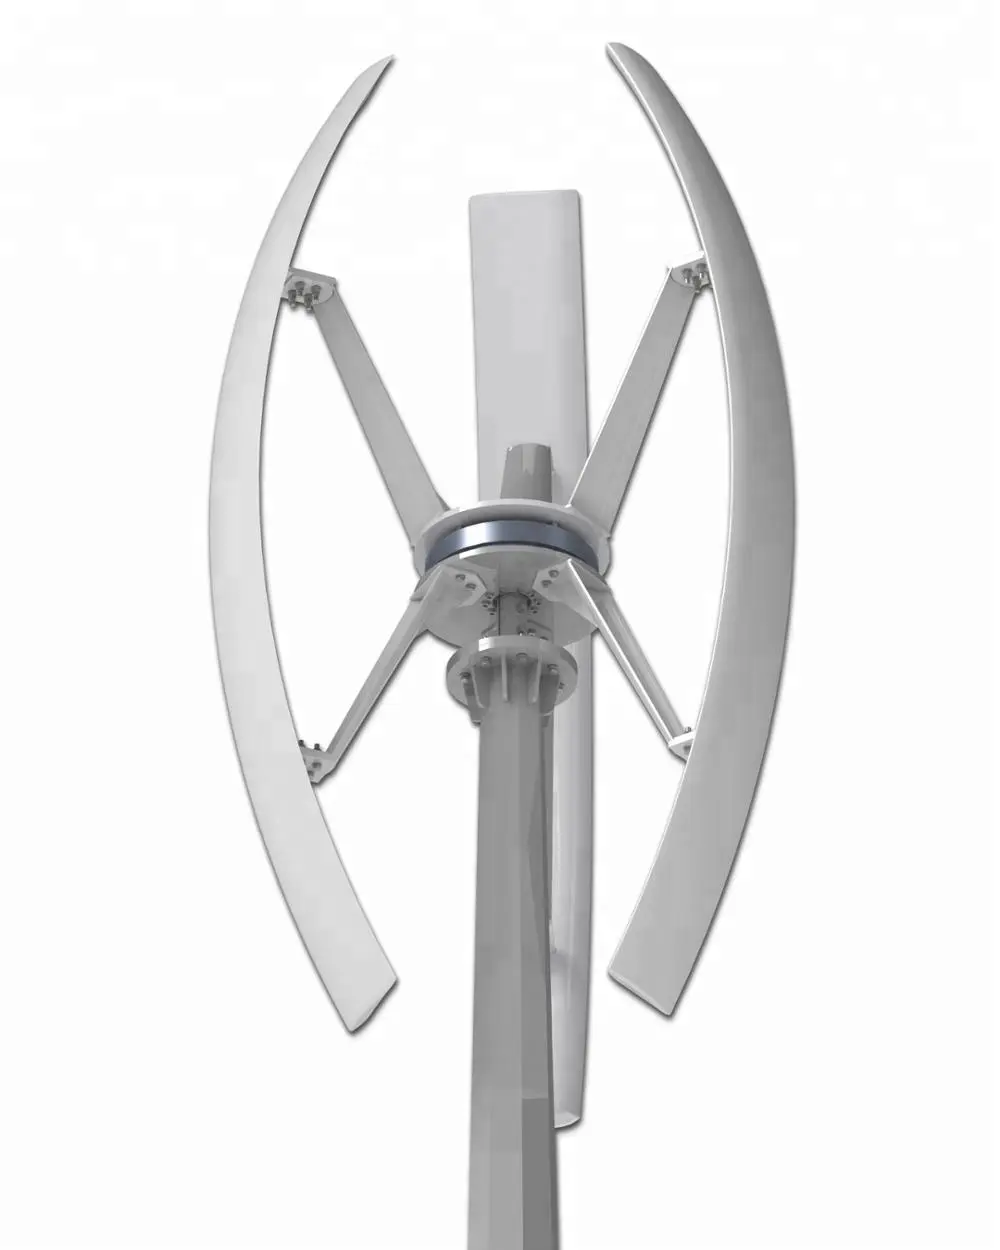 2 turbinas eólicas vertical, design helicónico, gerador de energia eólica doméstico